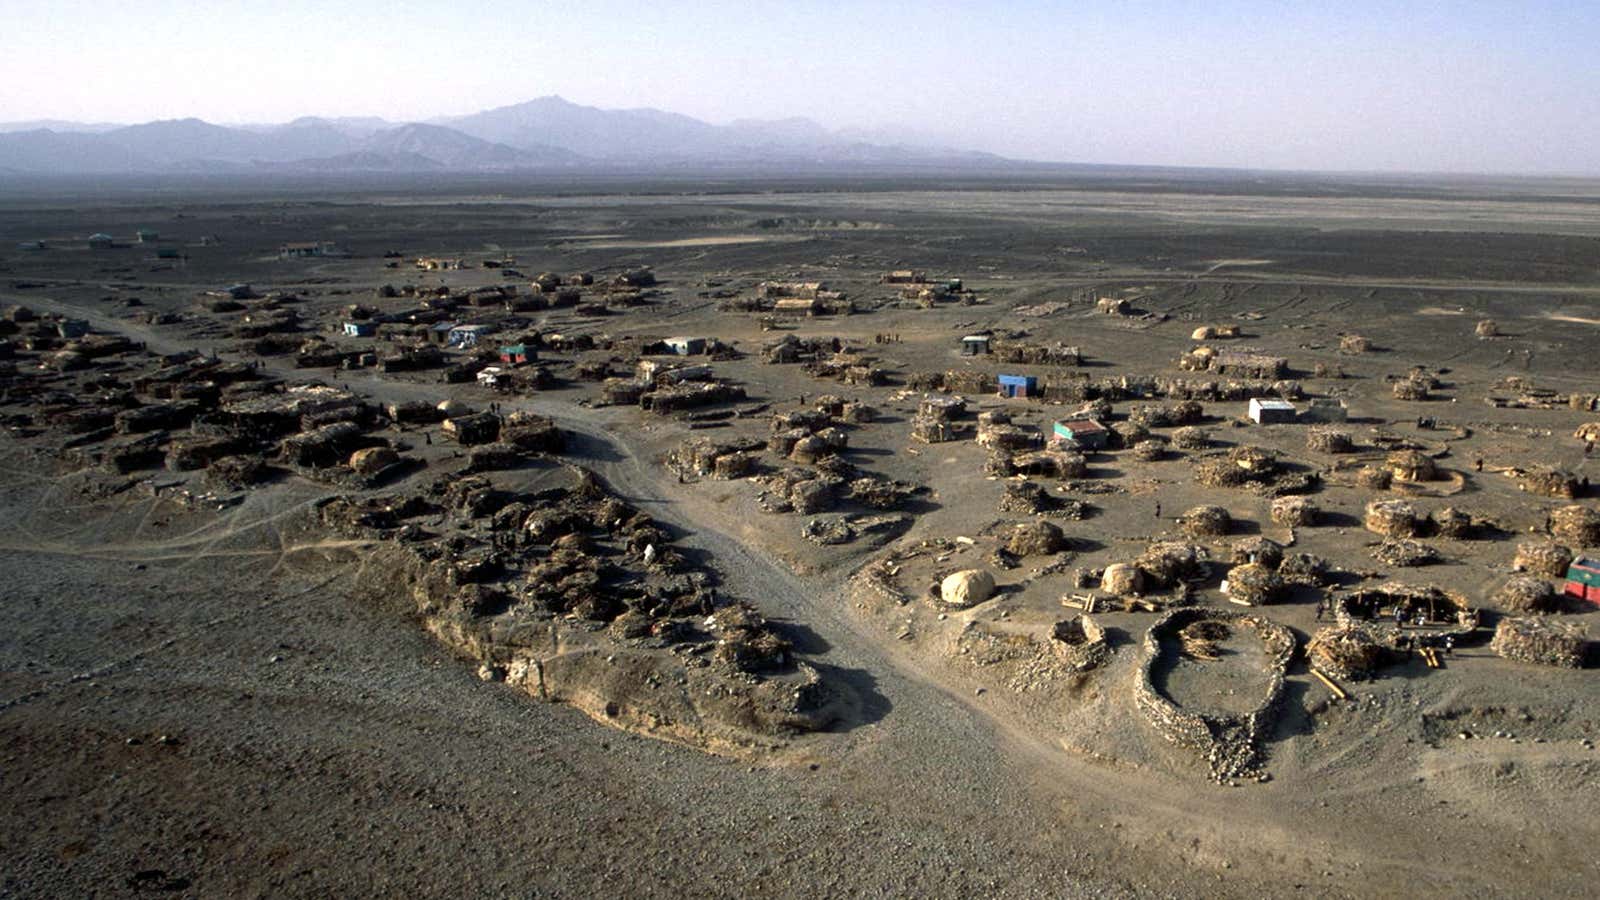 Afar depression, 120 meters below sea level, an arid region near the Eritrean border in Ethiopia